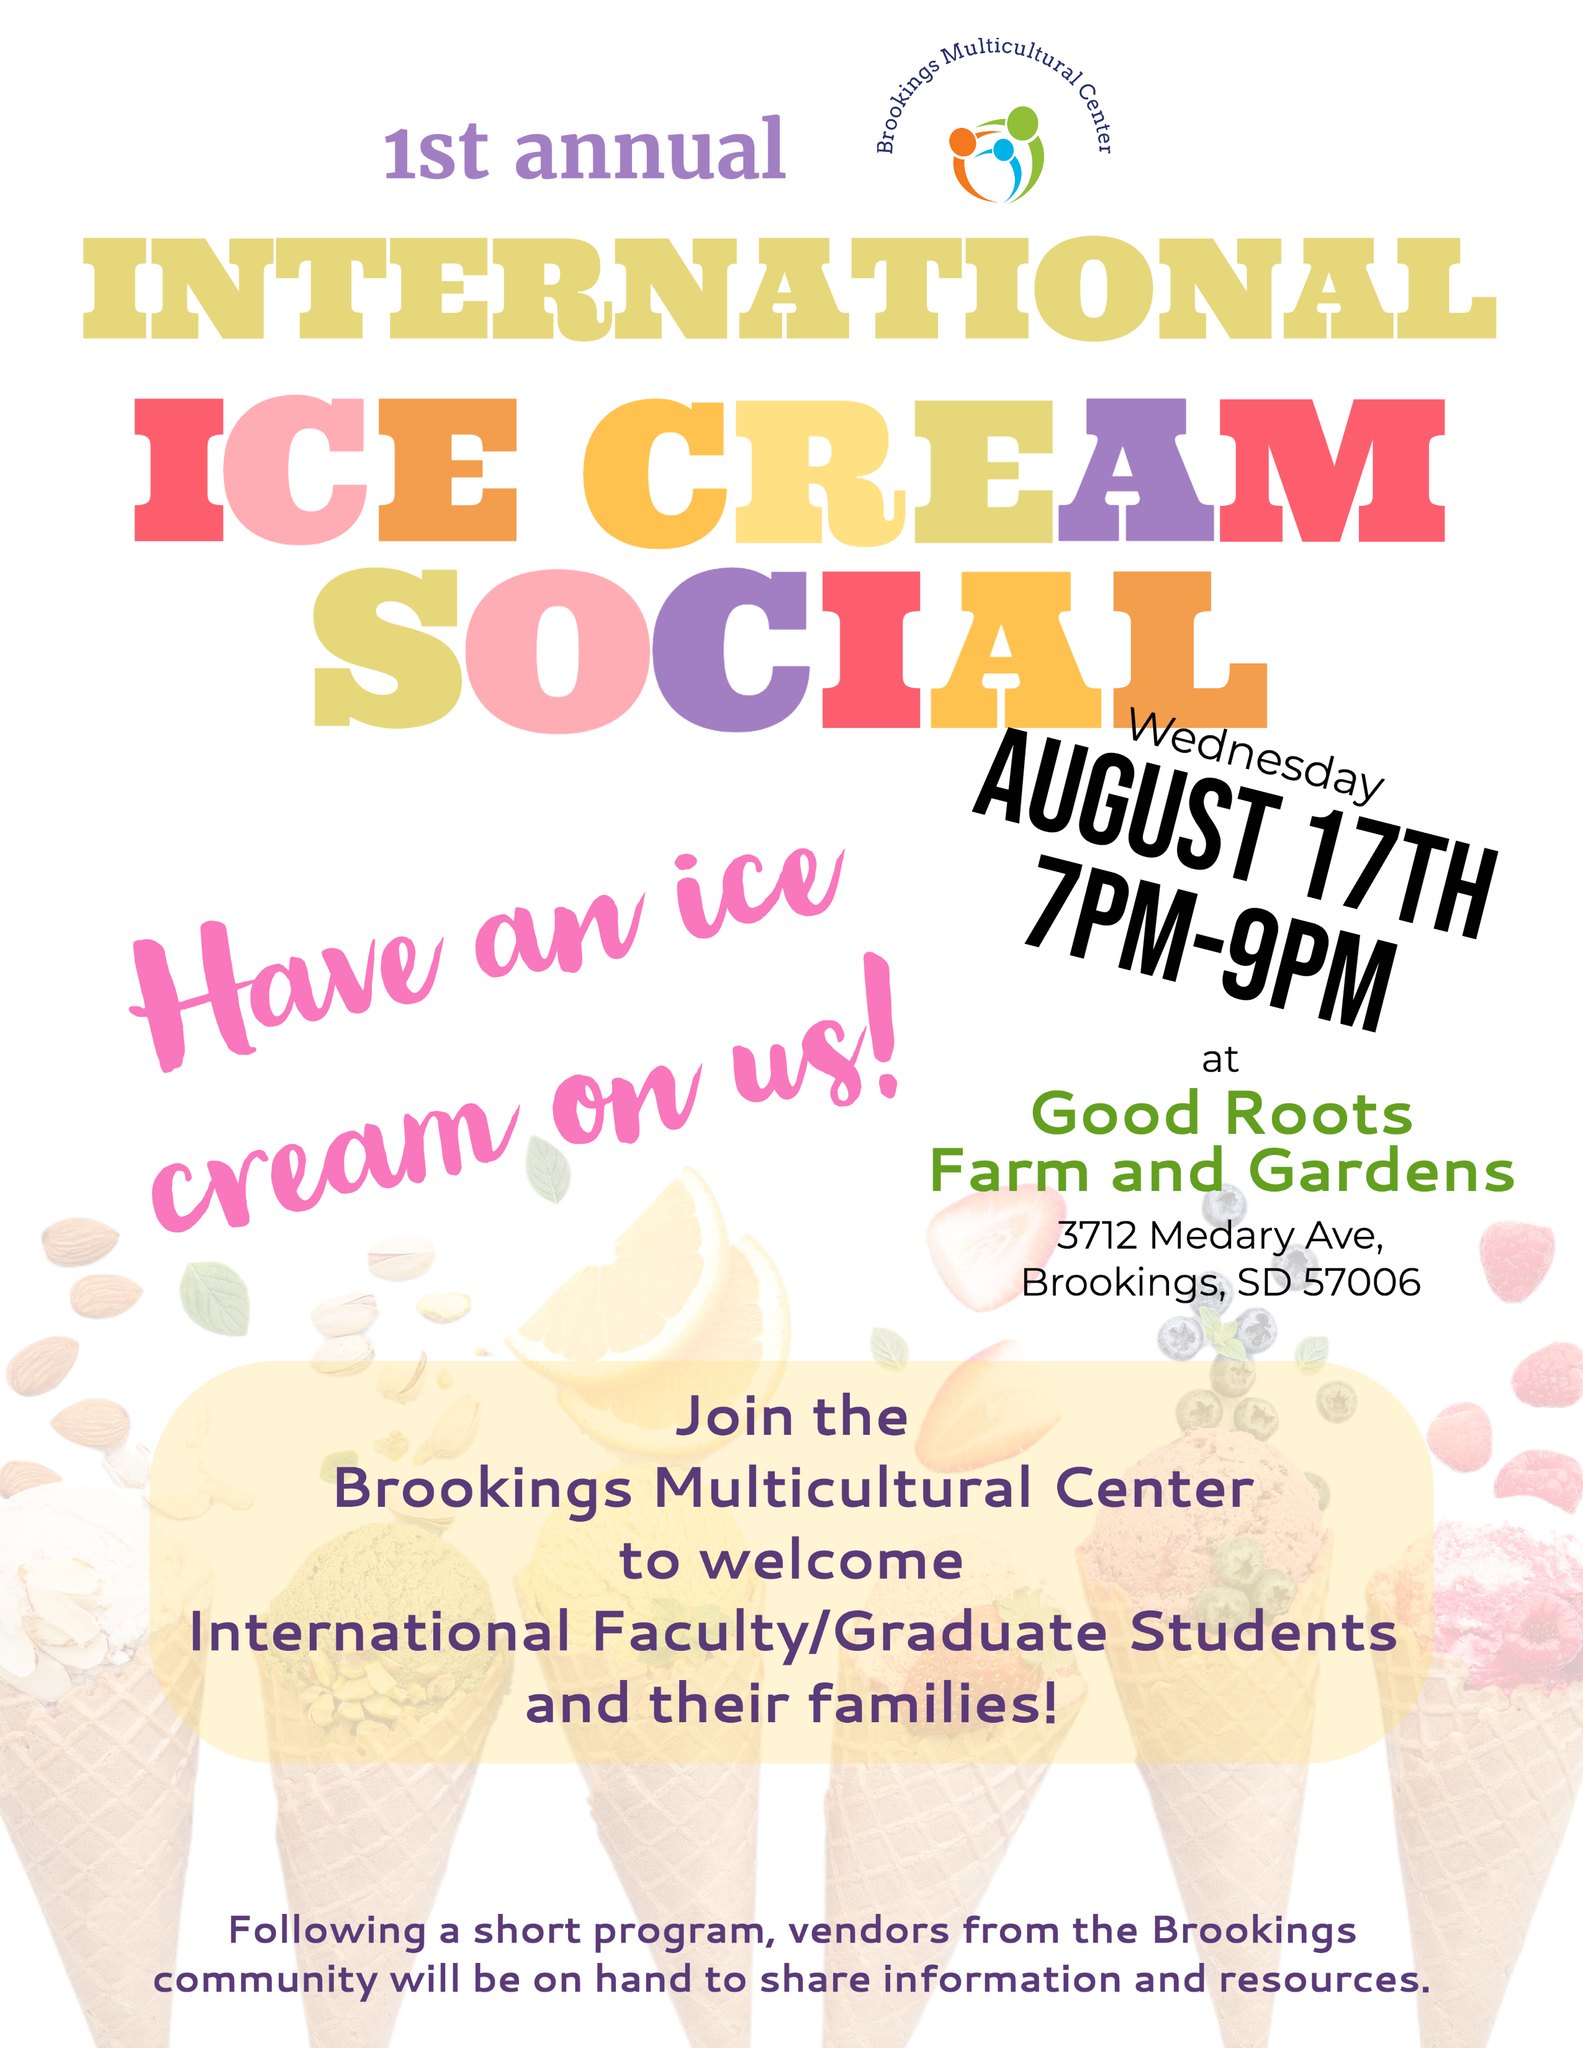 International Ice Cream Social & Community Fair